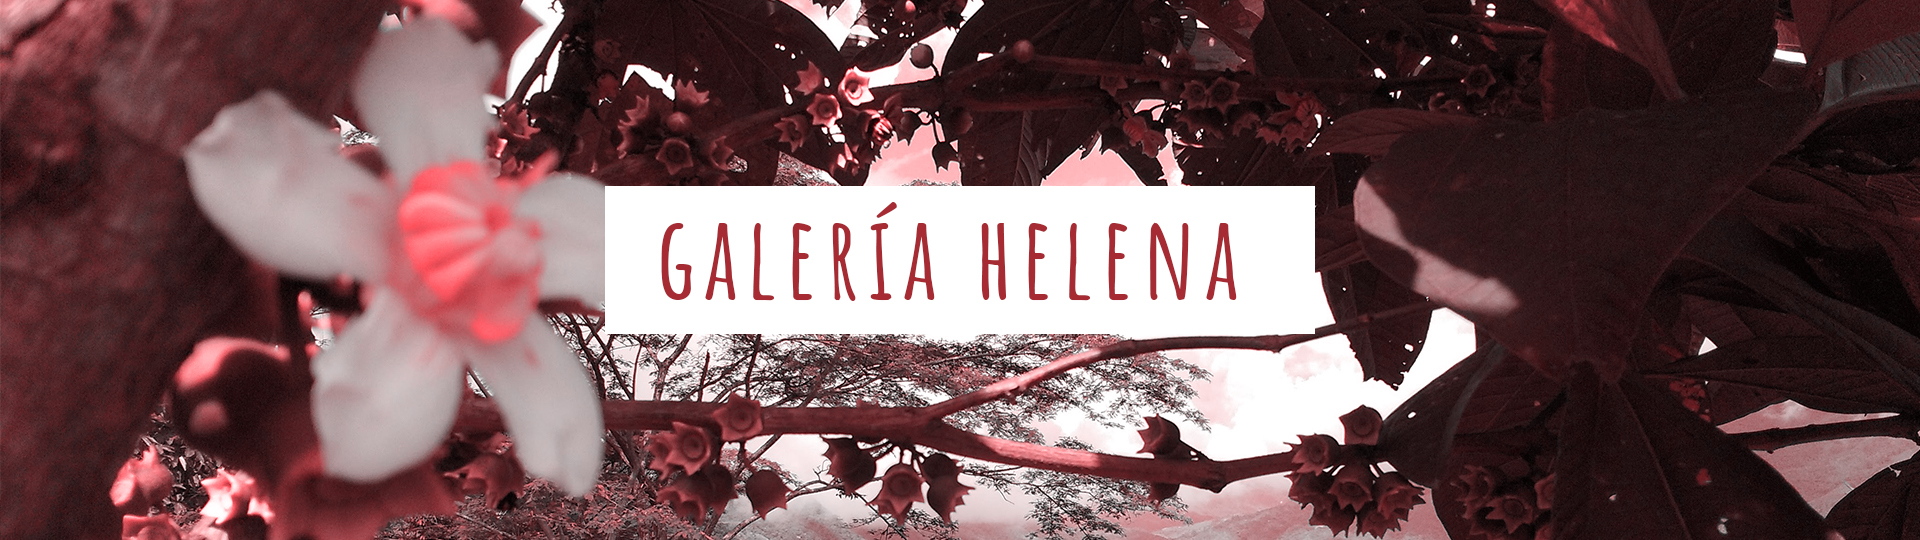 galeria-Helena-1